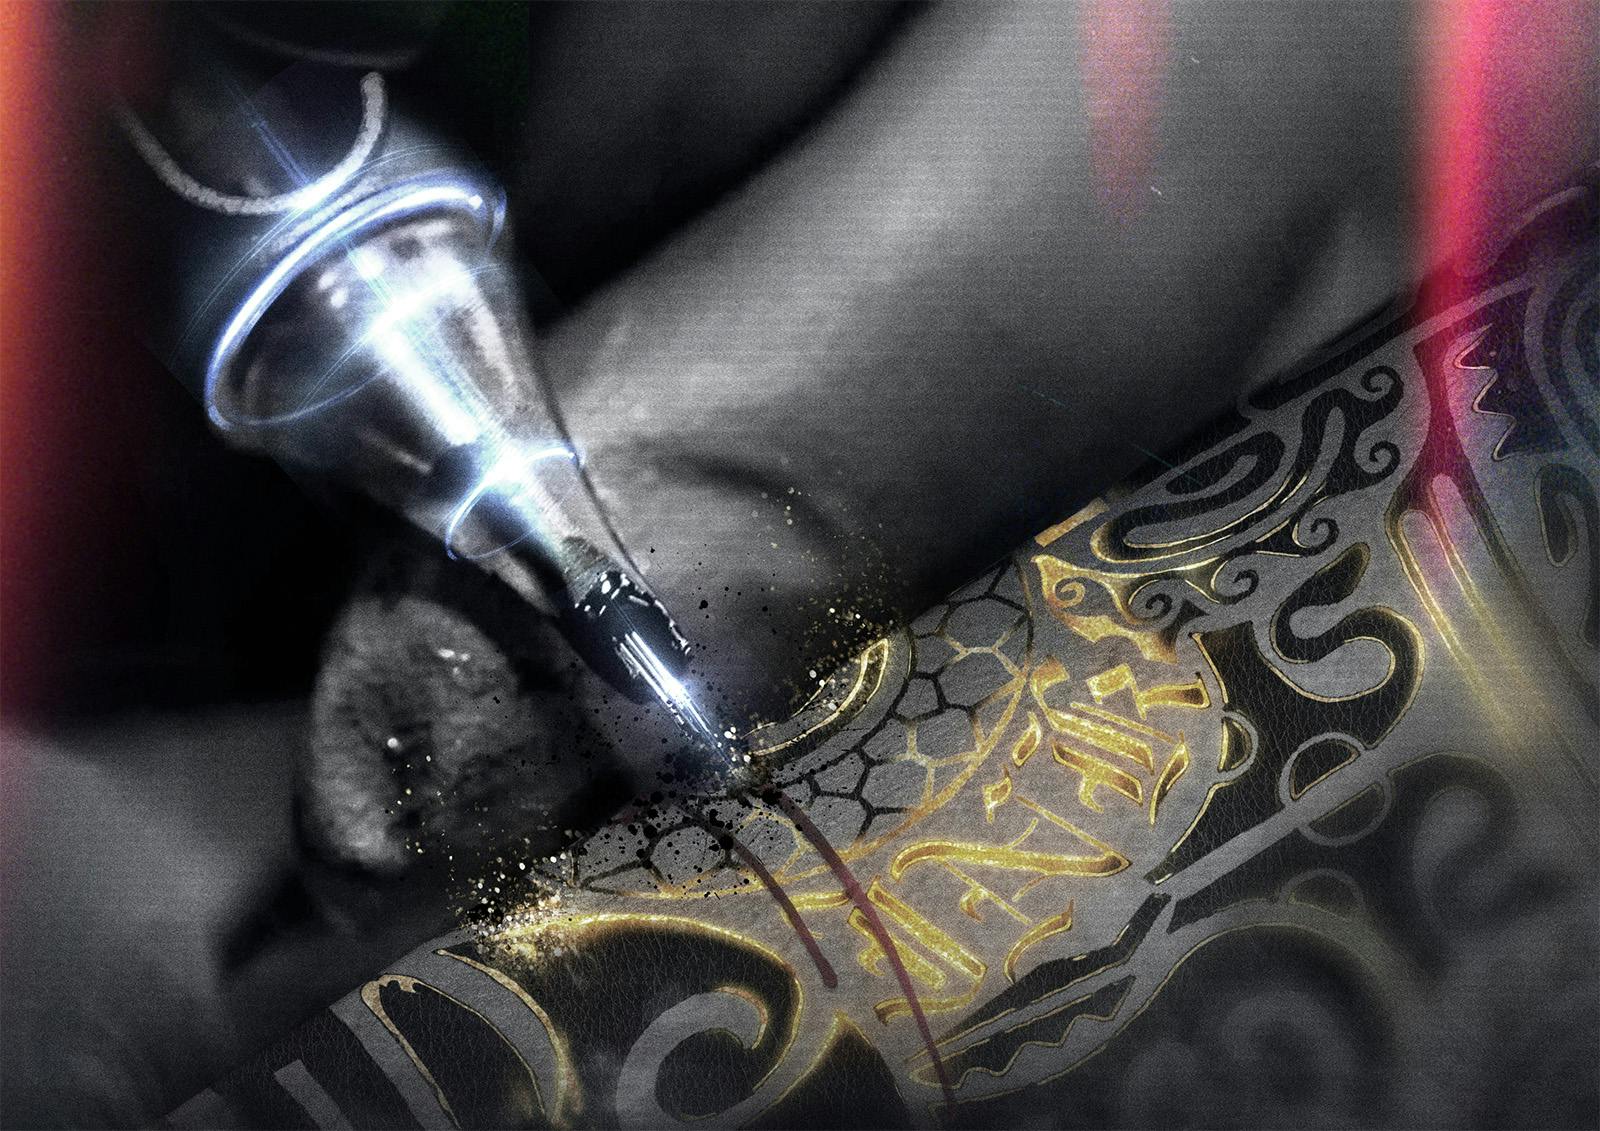 Graphic tattoo needle making gold pattern